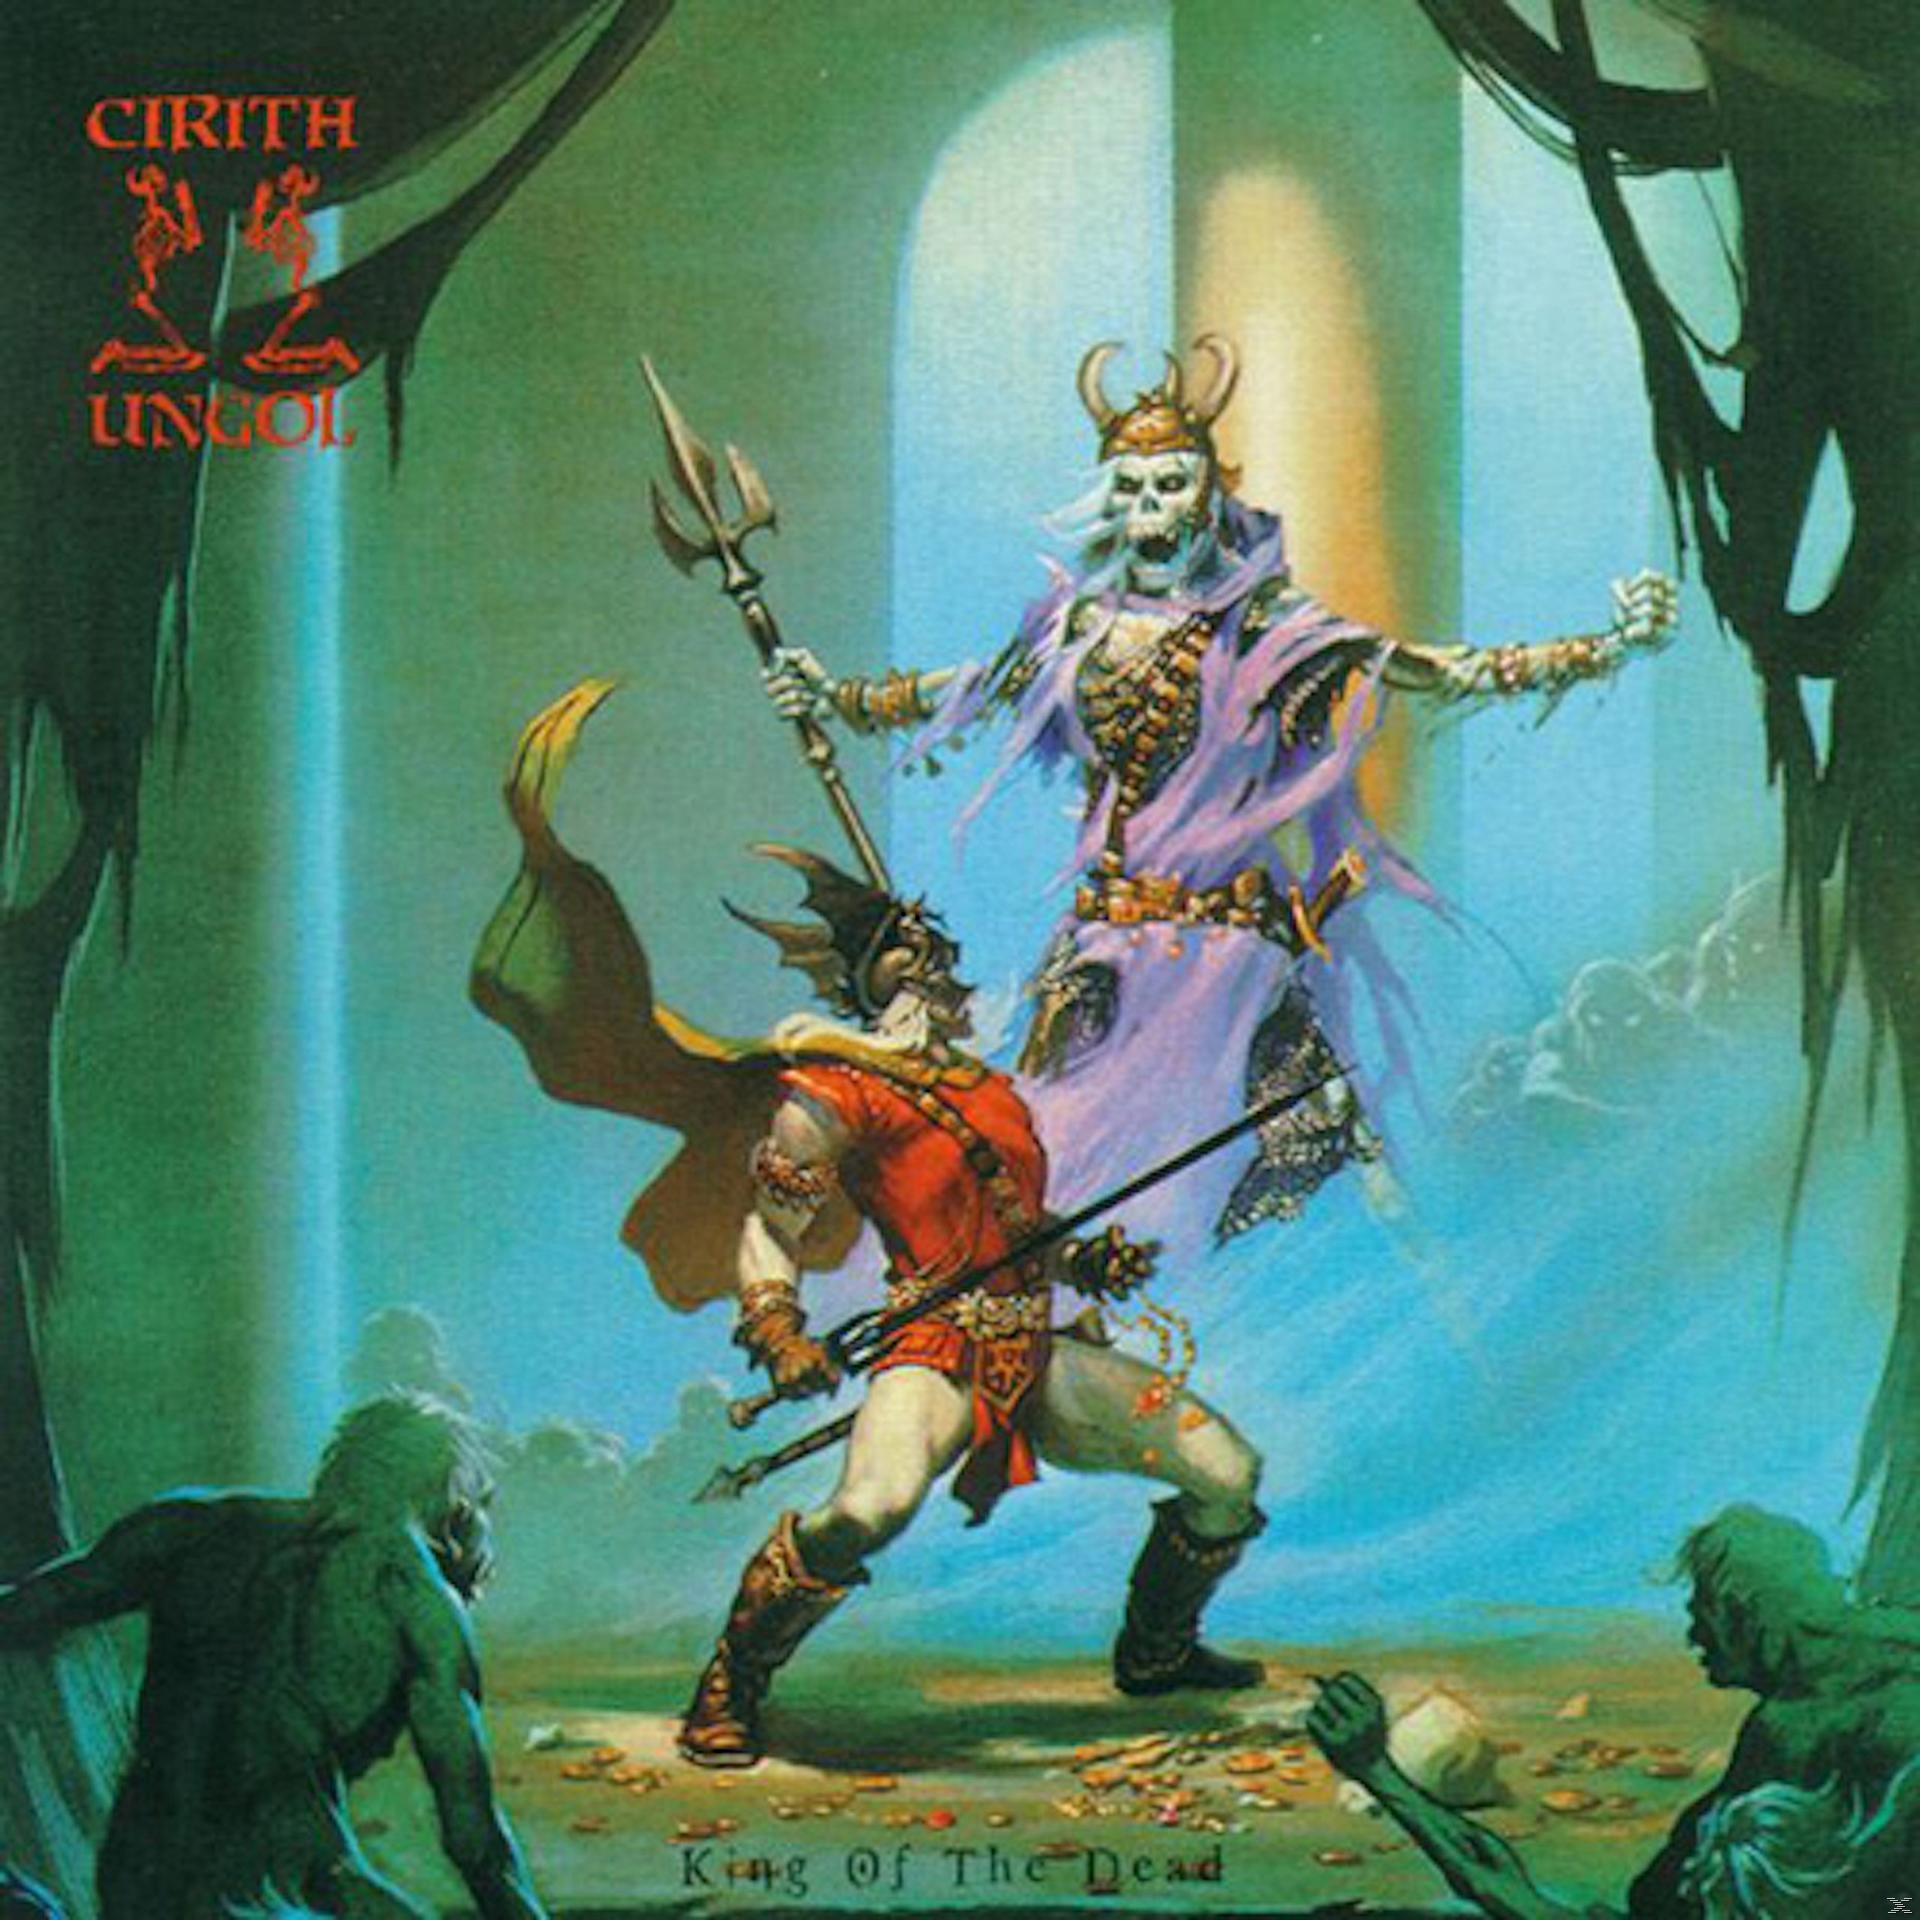 - King of Cirith Black Vinyl Ed Ungol Ltd (Vinyl) the Dead-180g -